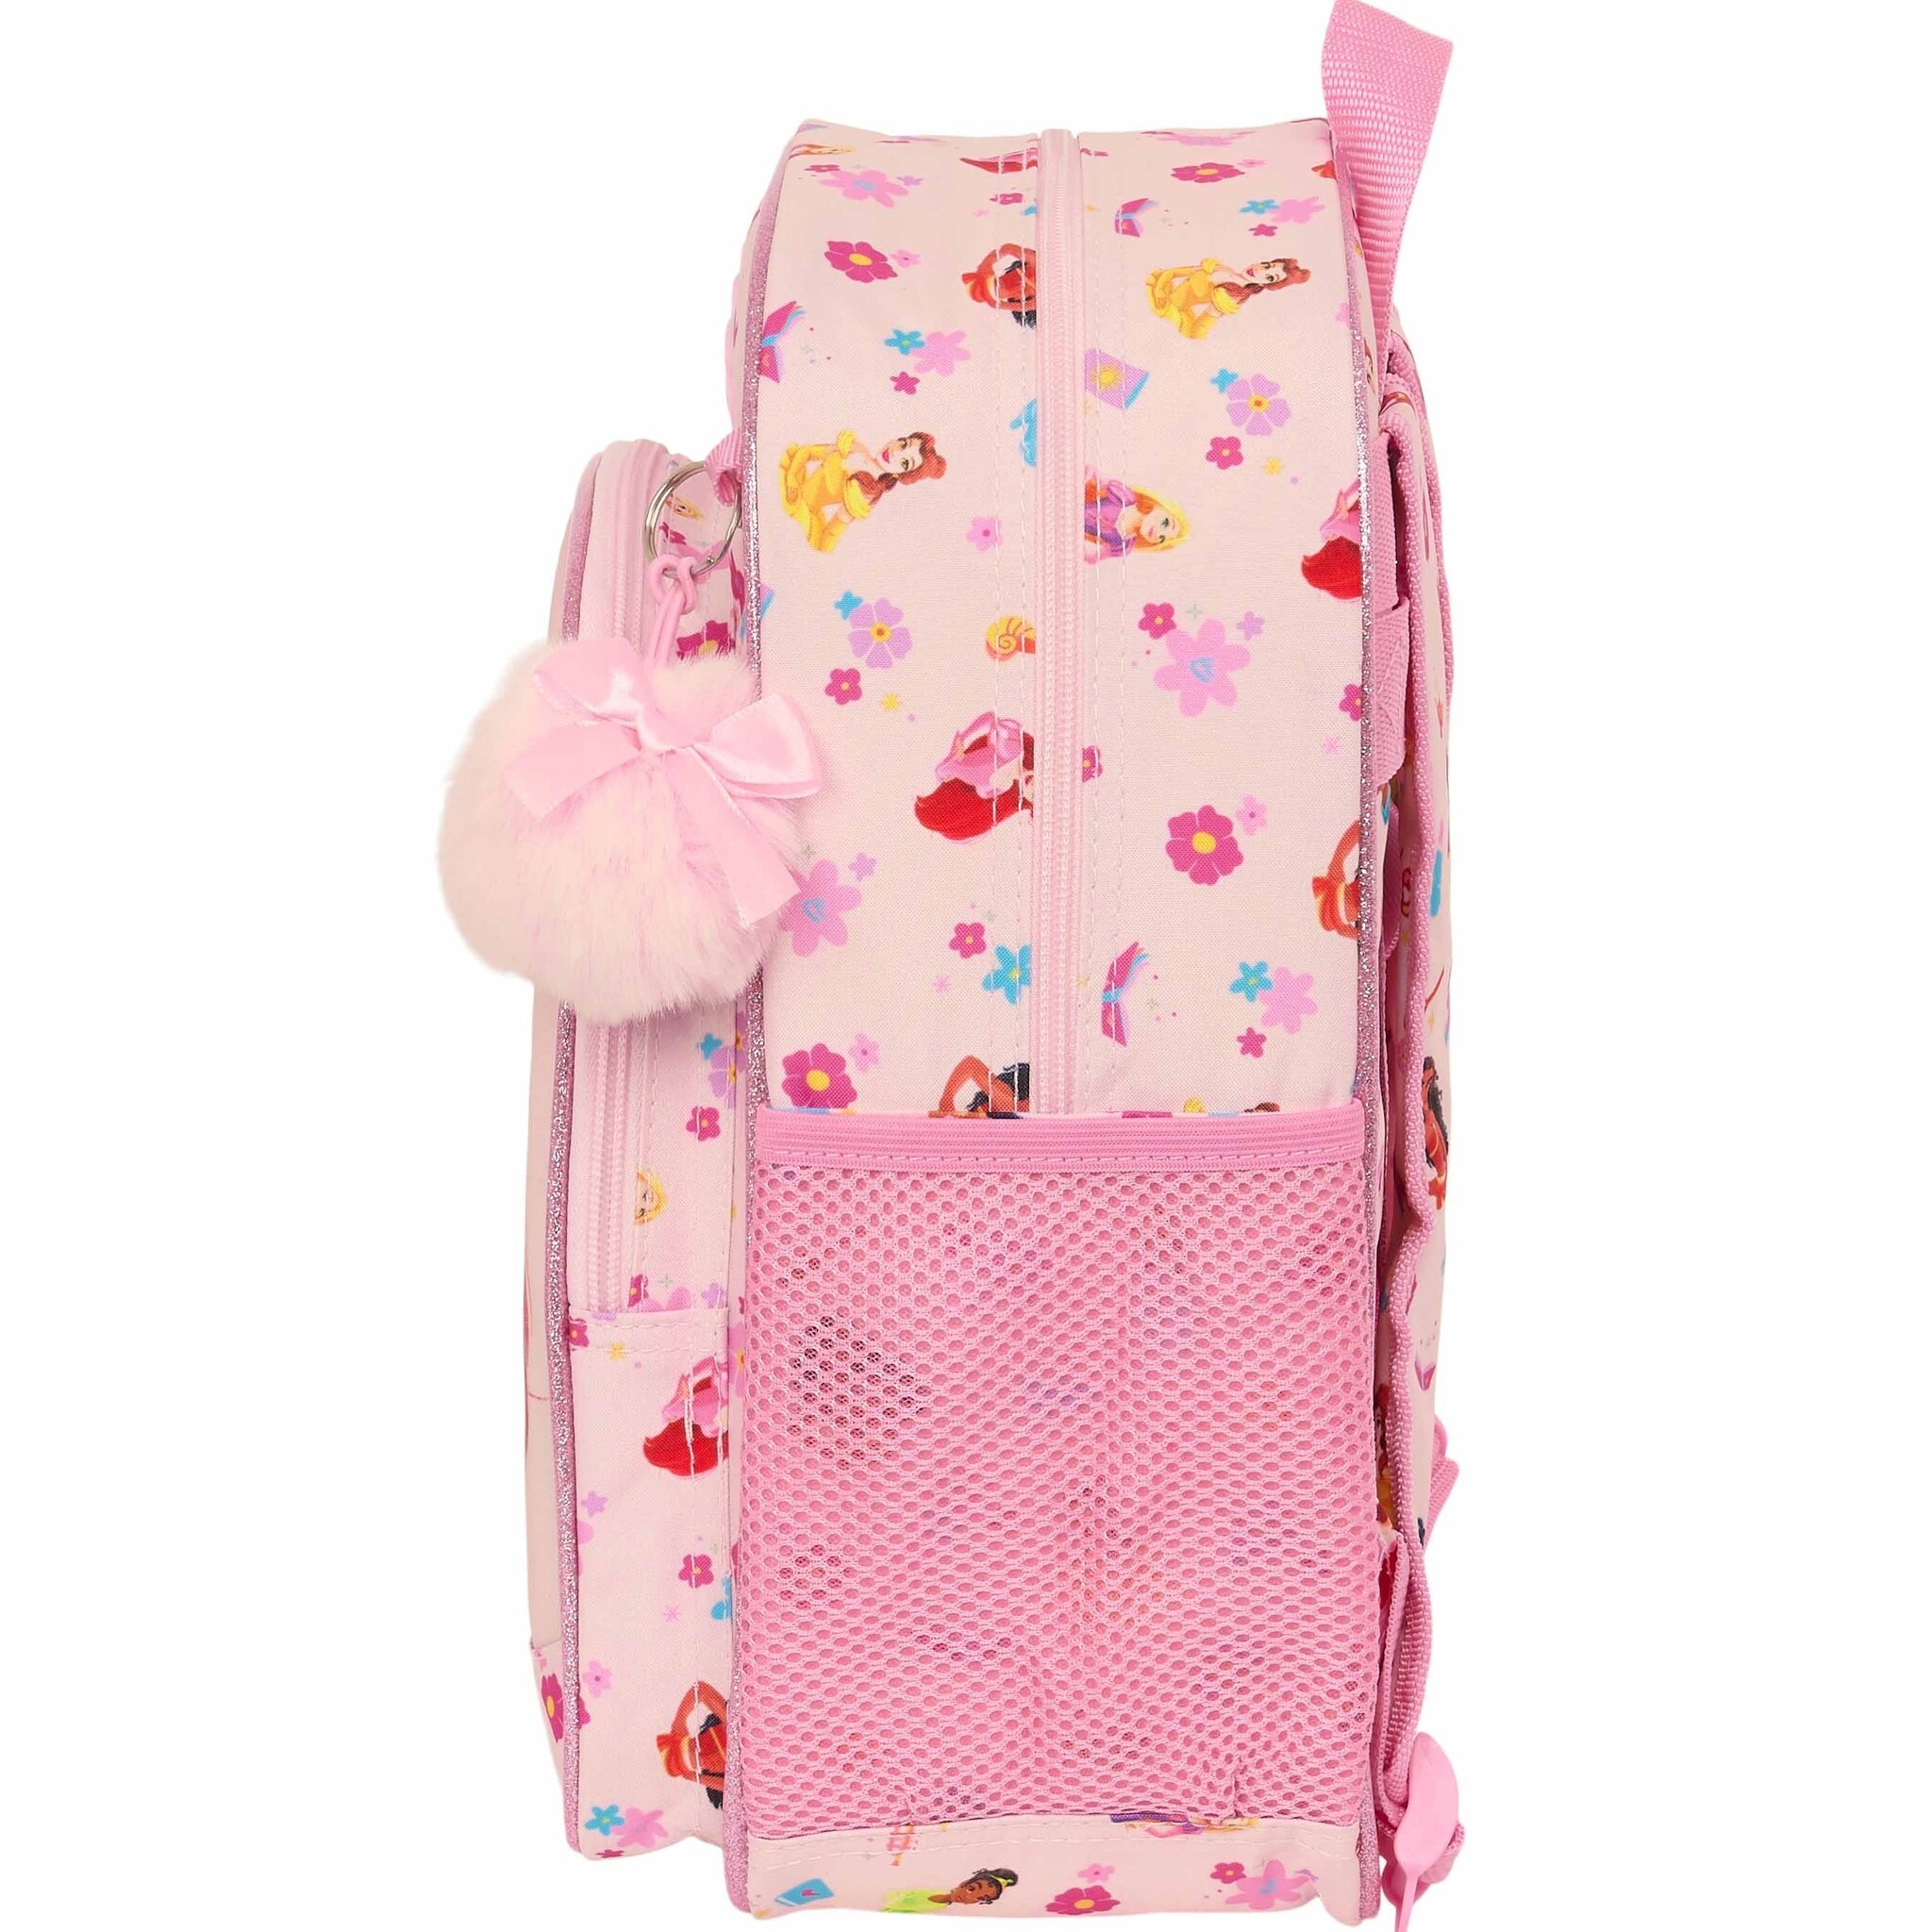 Disney Princess Backpack, Summer Adventures - 34 x 26 x 11 cm - Polyester